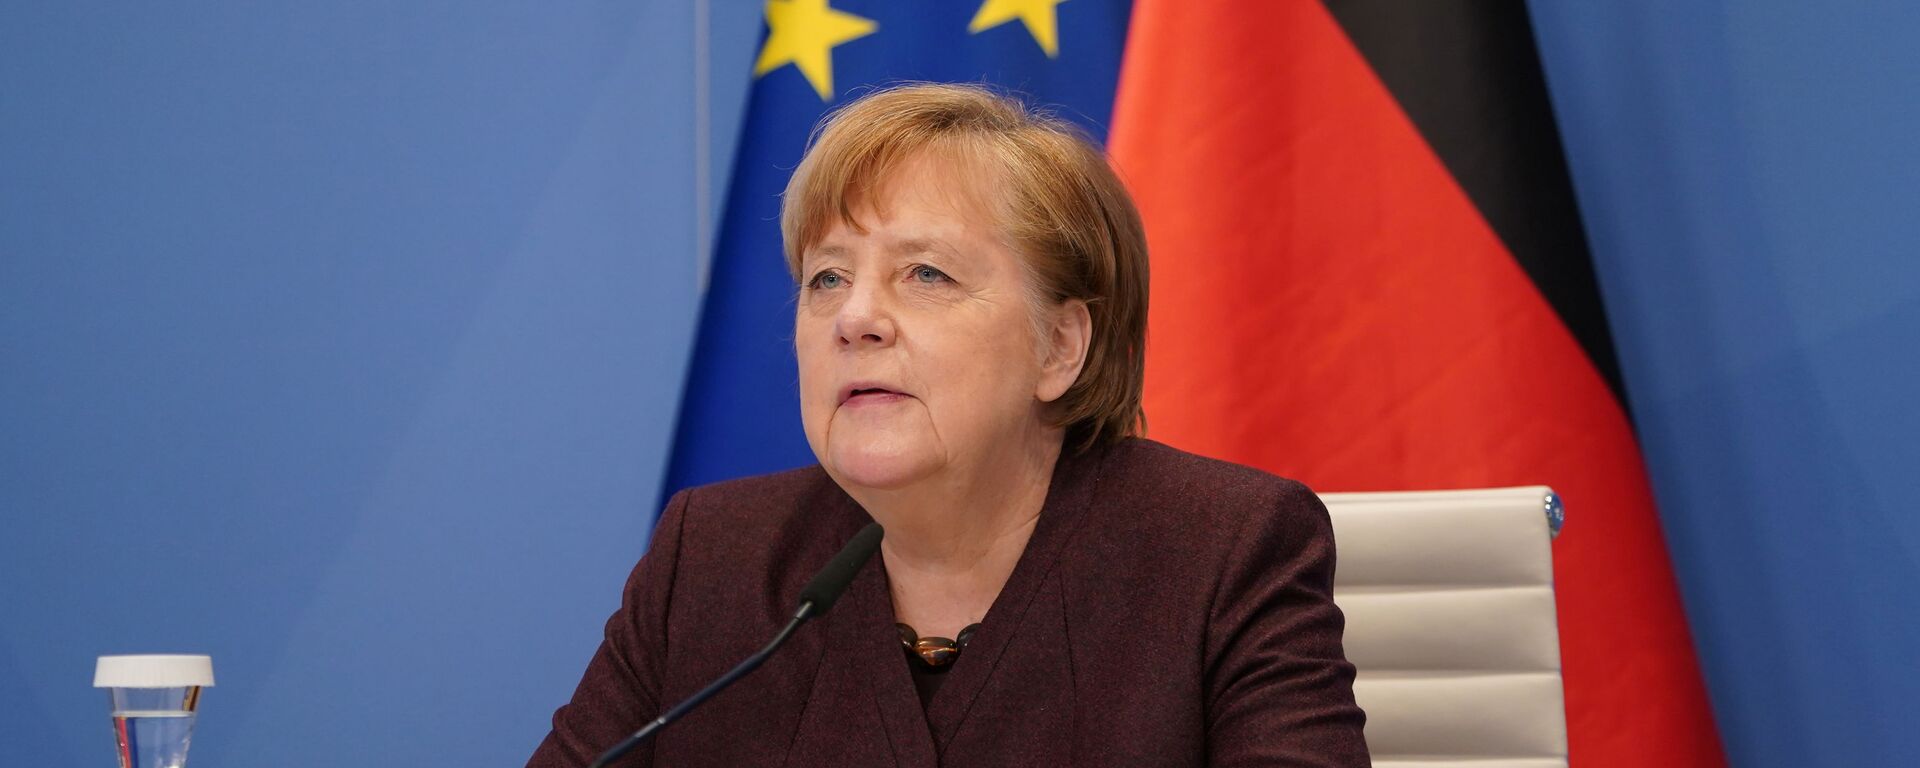 Angela Merkel, canciller alemana - Sputnik Mundo, 1920, 19.03.2021